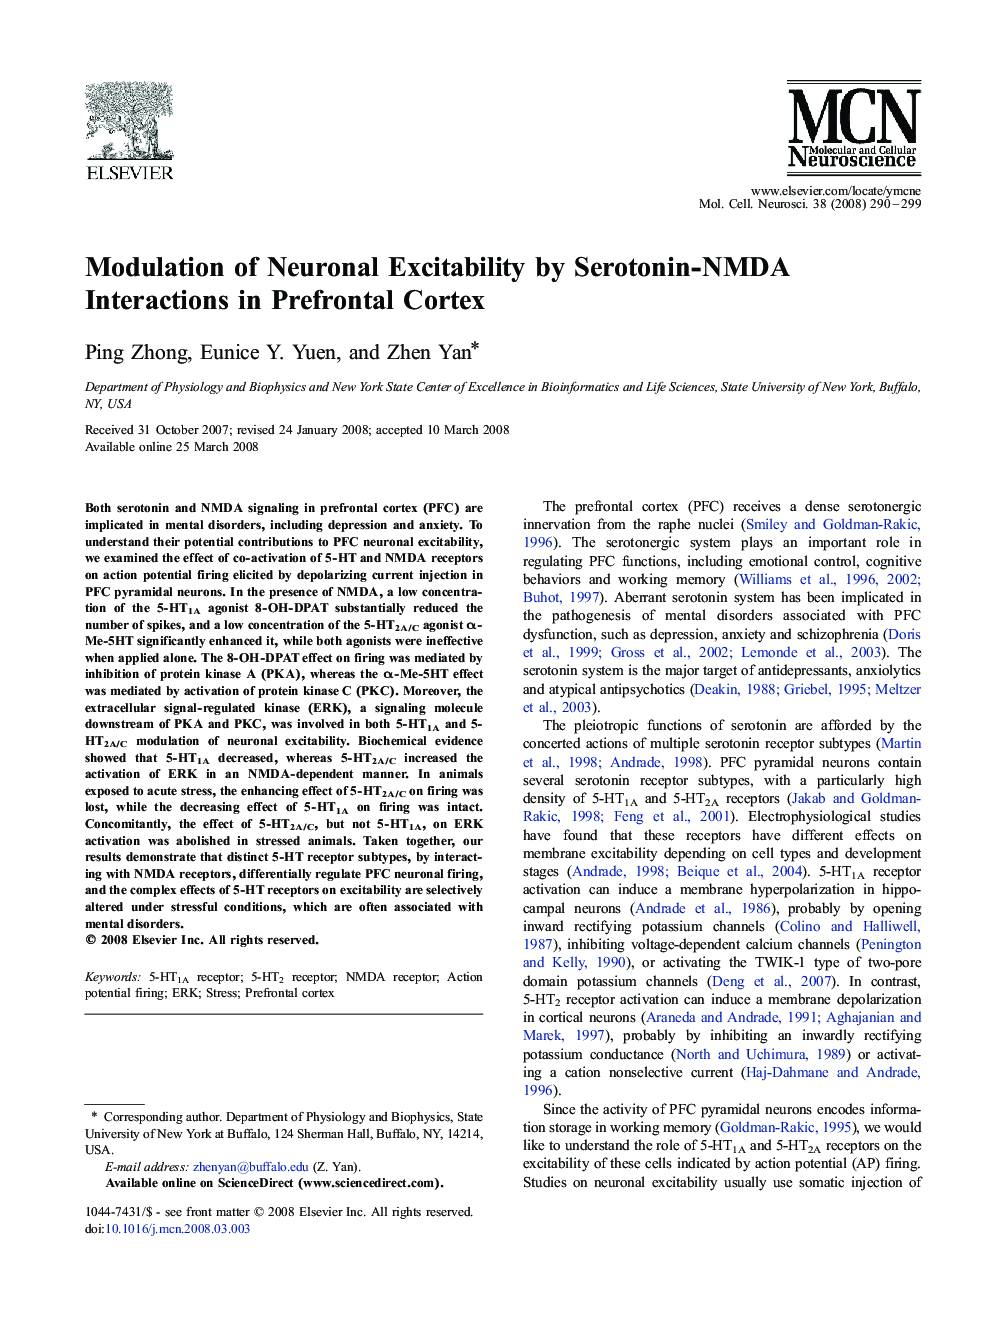 Modulation of Neuronal Excitability by Serotonin-NMDA Interactions in Prefrontal Cortex